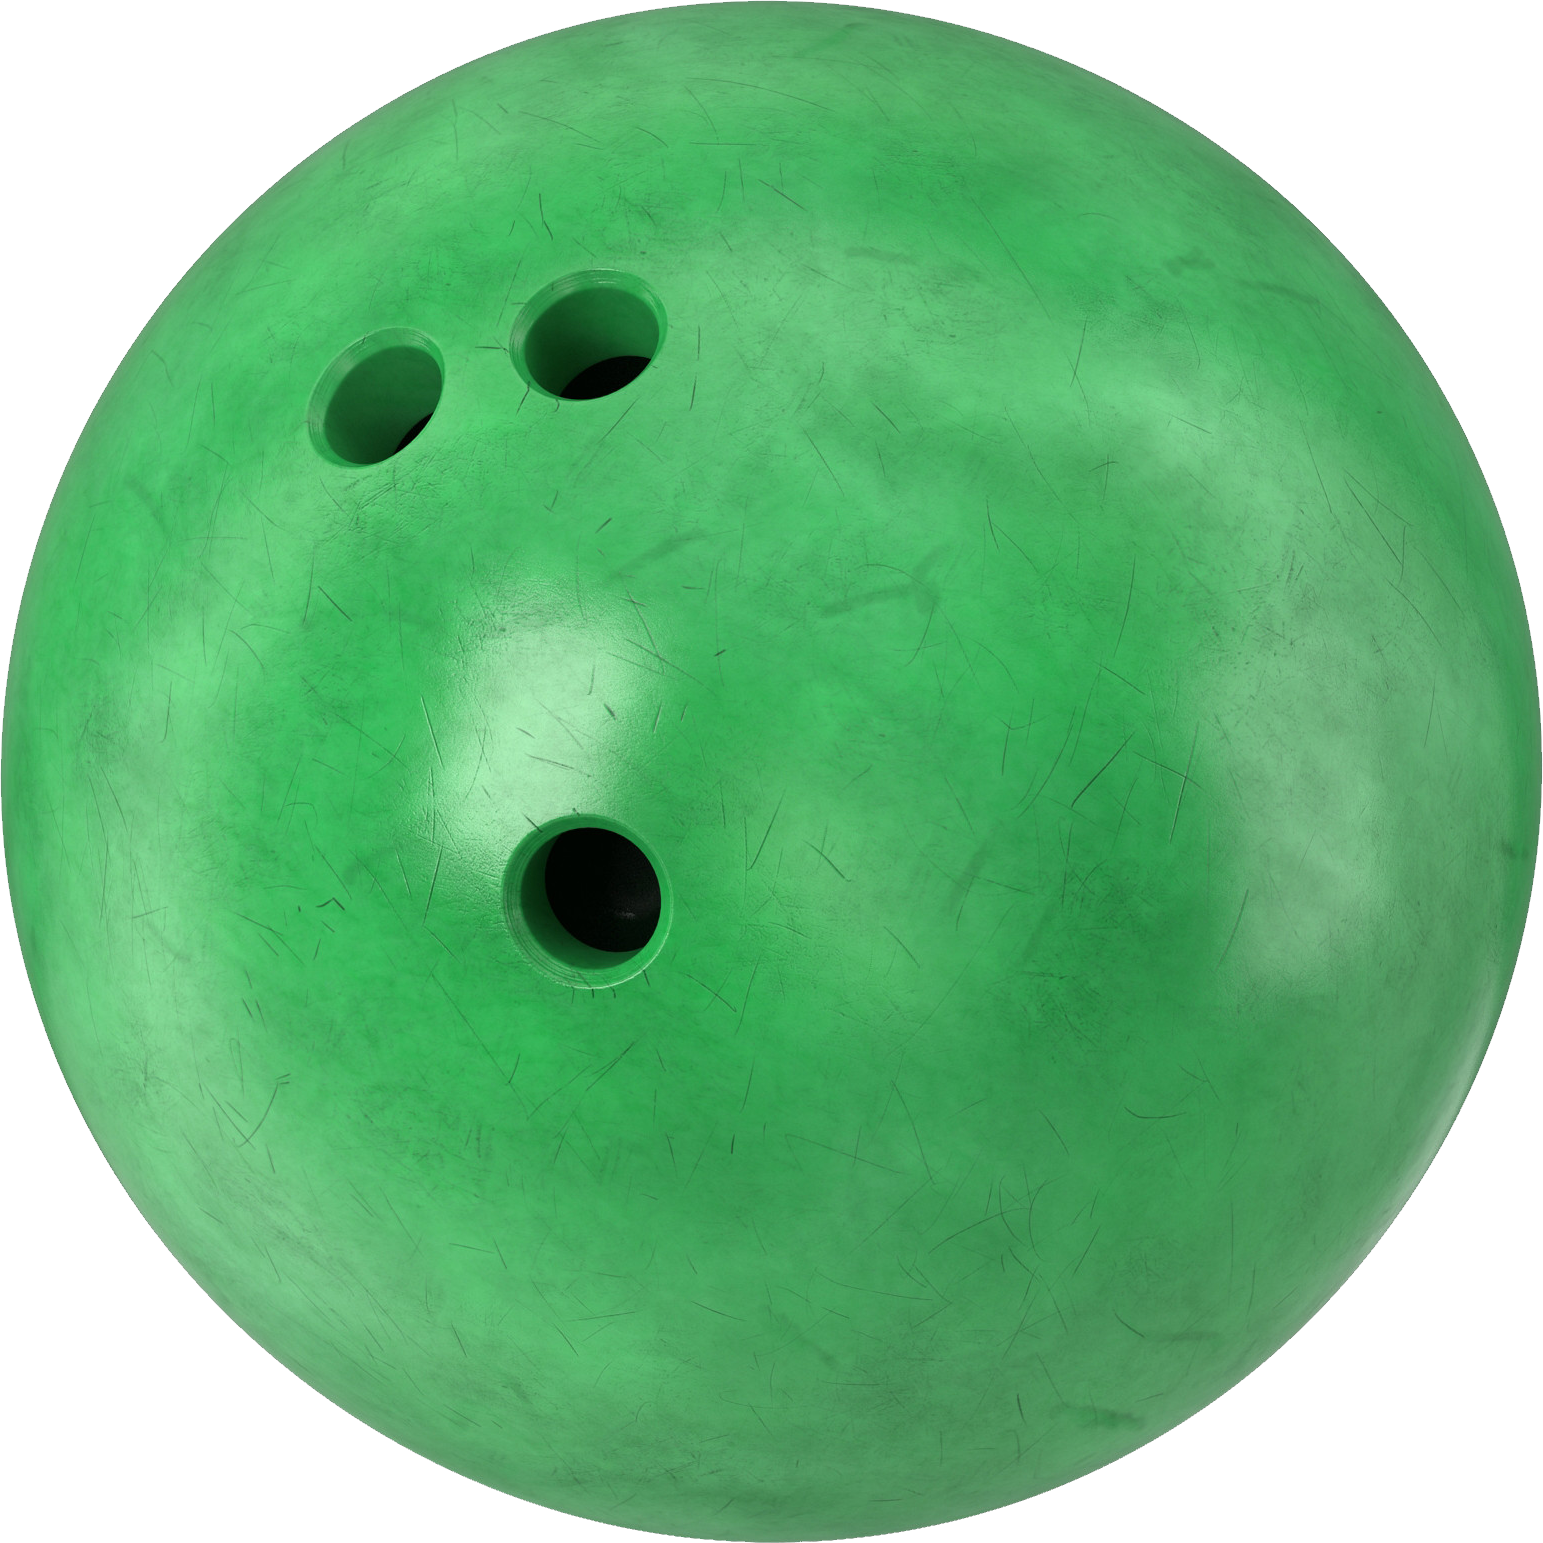 Bowling Ball PNG HD - 146342